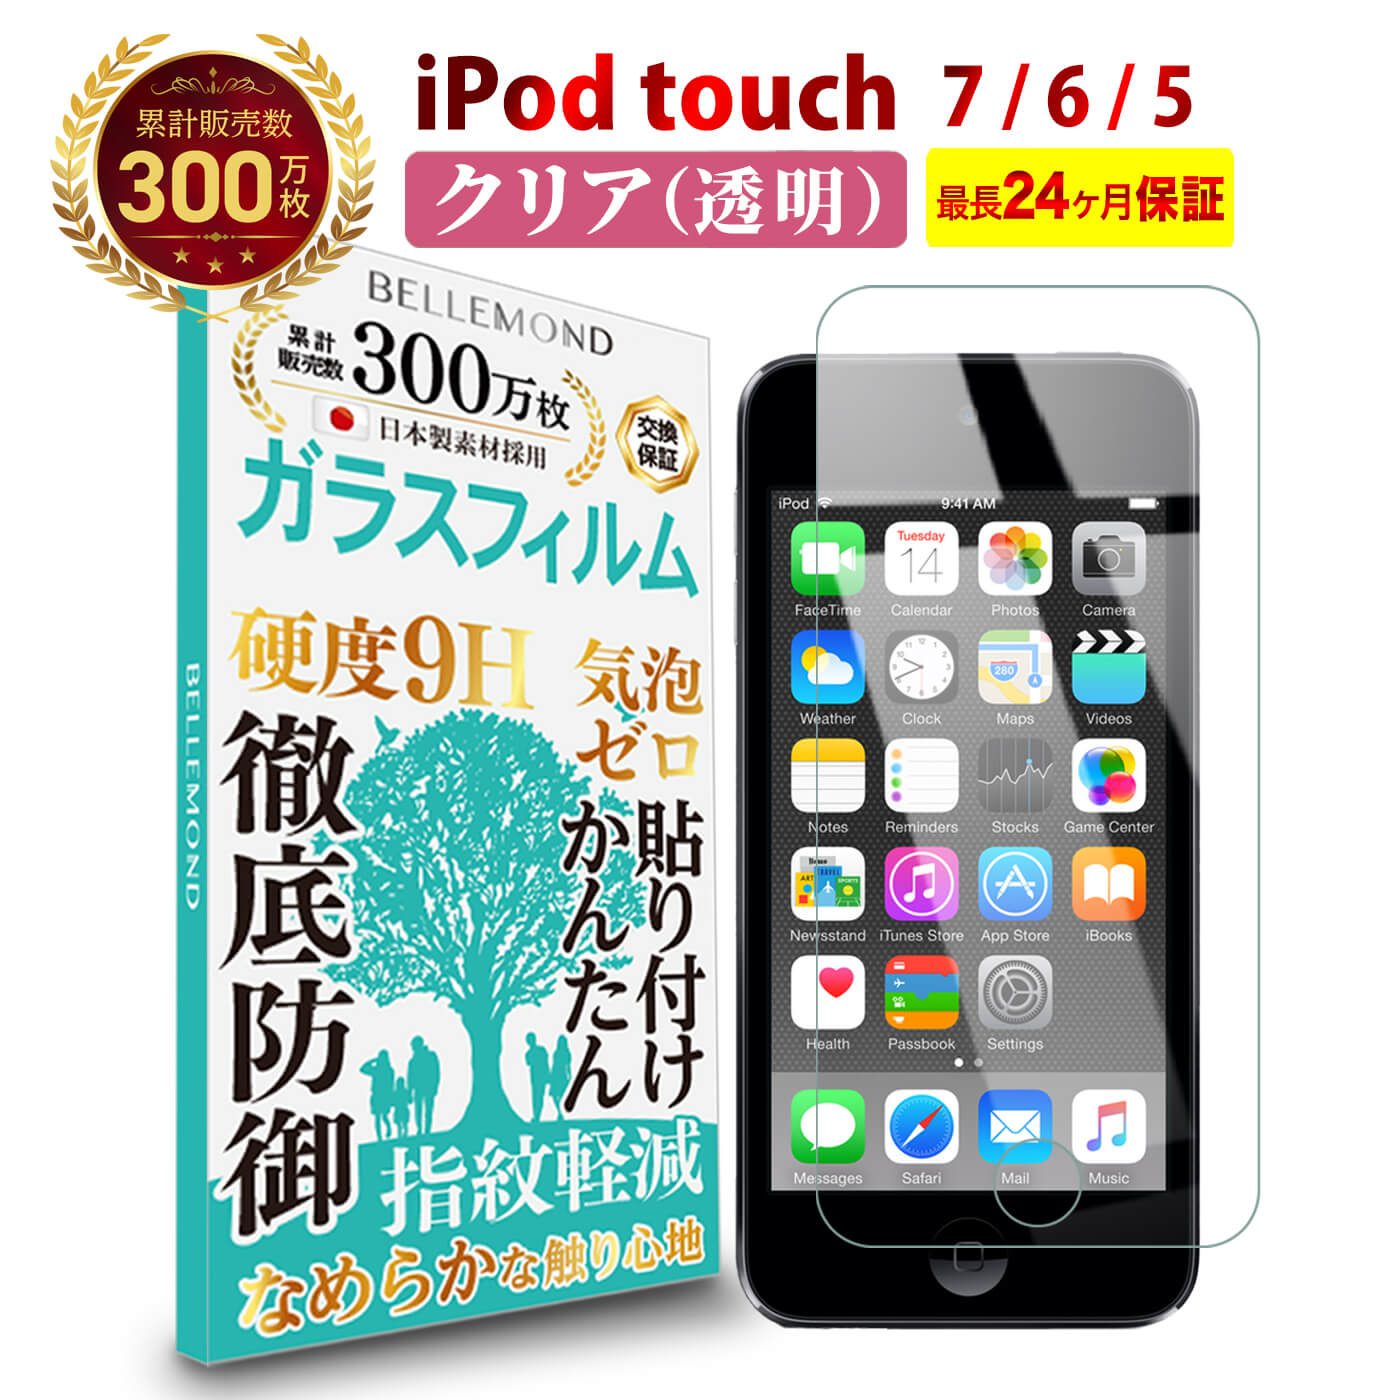 iPod touch 567 ガラスフィルム クリア 透明アイポッドタッチiPod touch 6iPod touch 7 液晶 保護フィルム 高透過 高光沢 硬度 9H 強化ガラス 日本製素材 旭硝子 耐衝撃 指紋防止 気泡防止 飛散防止 指すべり なめらか